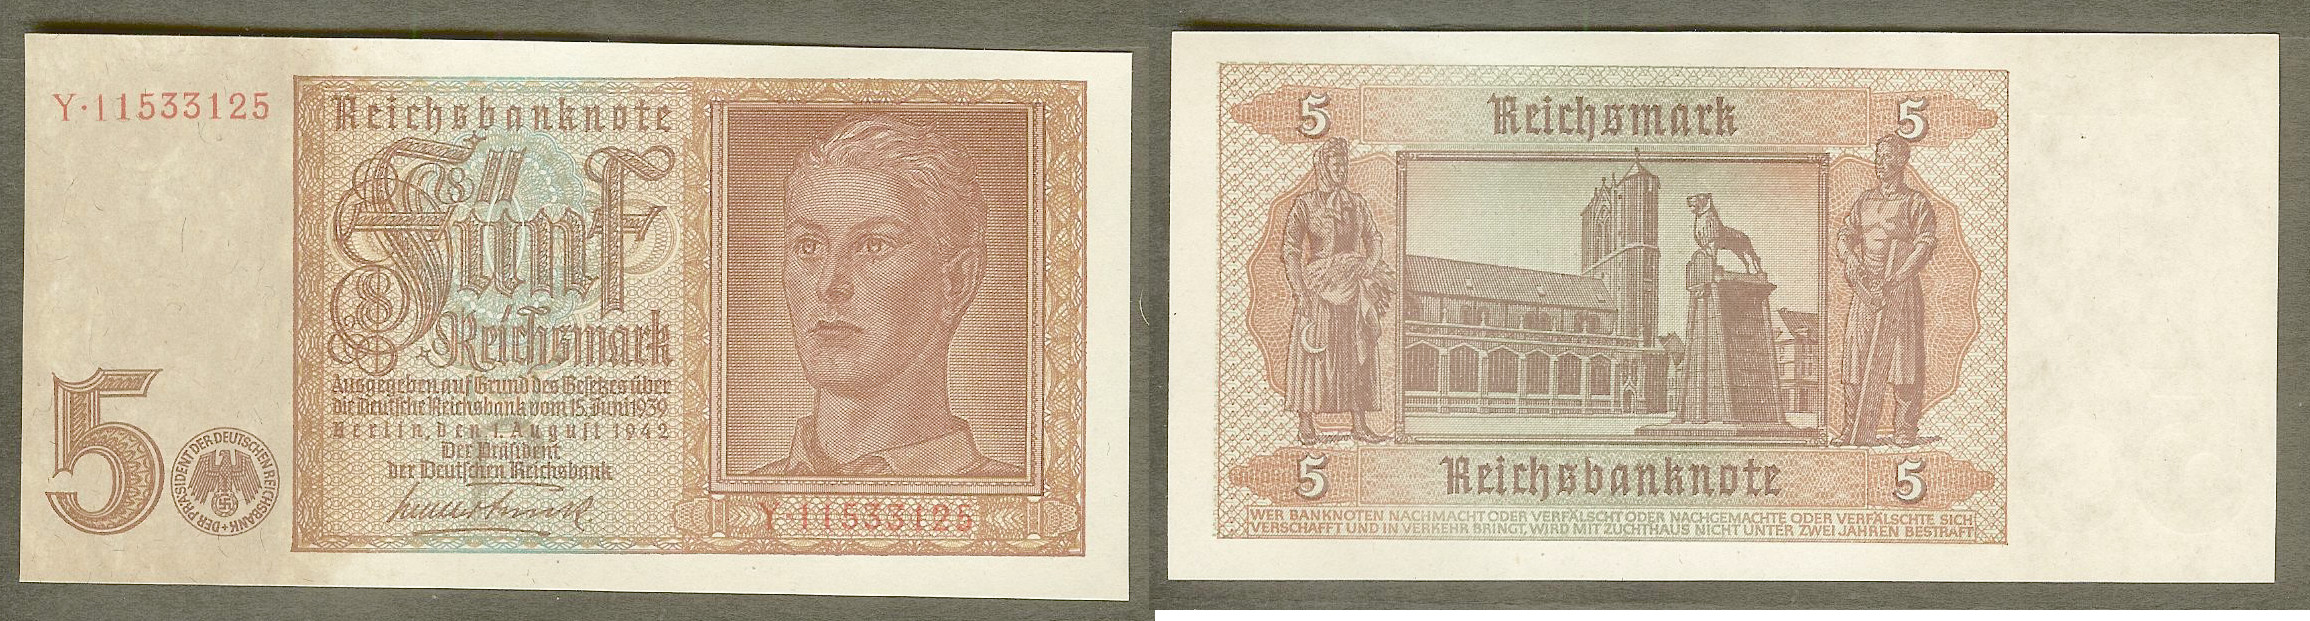 Germany 5 reichsmark 1.8.1942 Unc